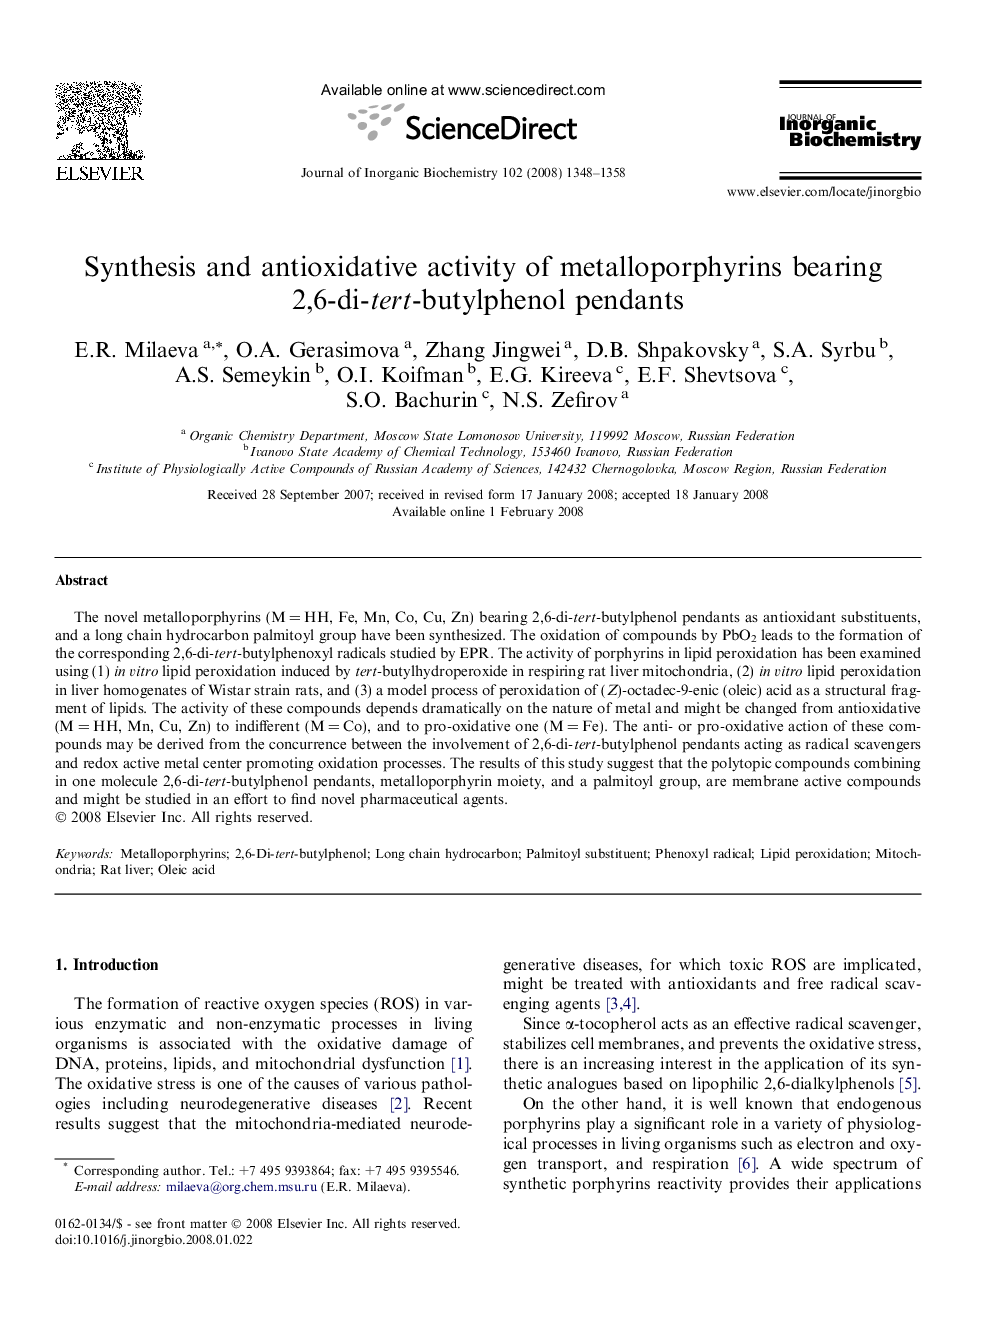 Synthesis and antioxidative activity of metalloporphyrins bearing 2,6-di-tert-butylphenol pendants